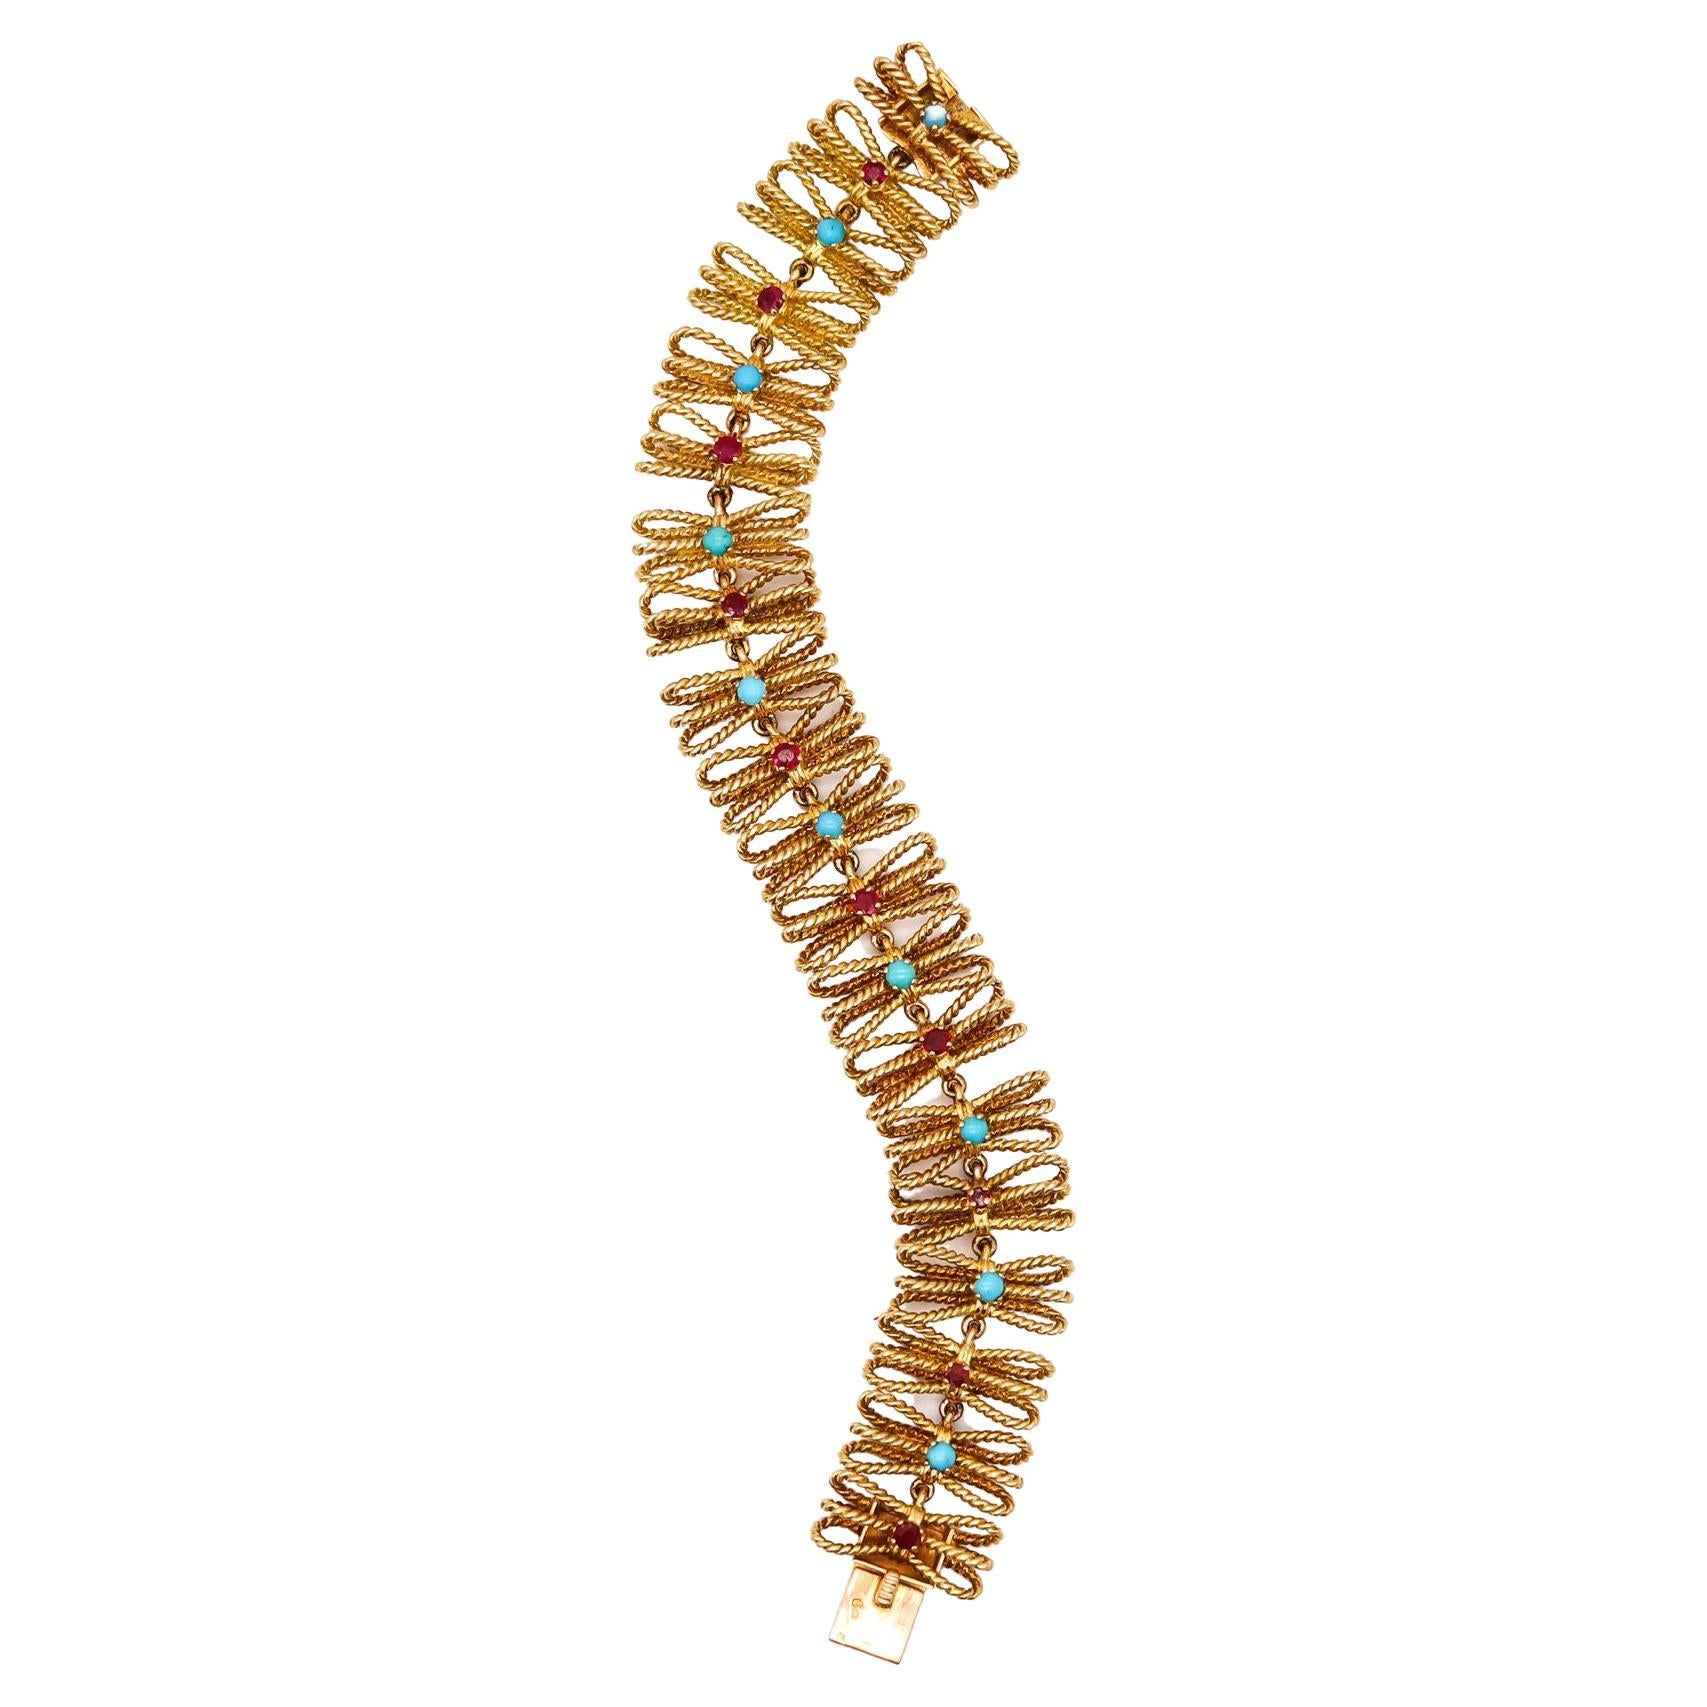 Mellerio-Dits Meller 1950 Paris Twisted Bracelet in 18kt Gold with 2.55ctw Gems For Sale